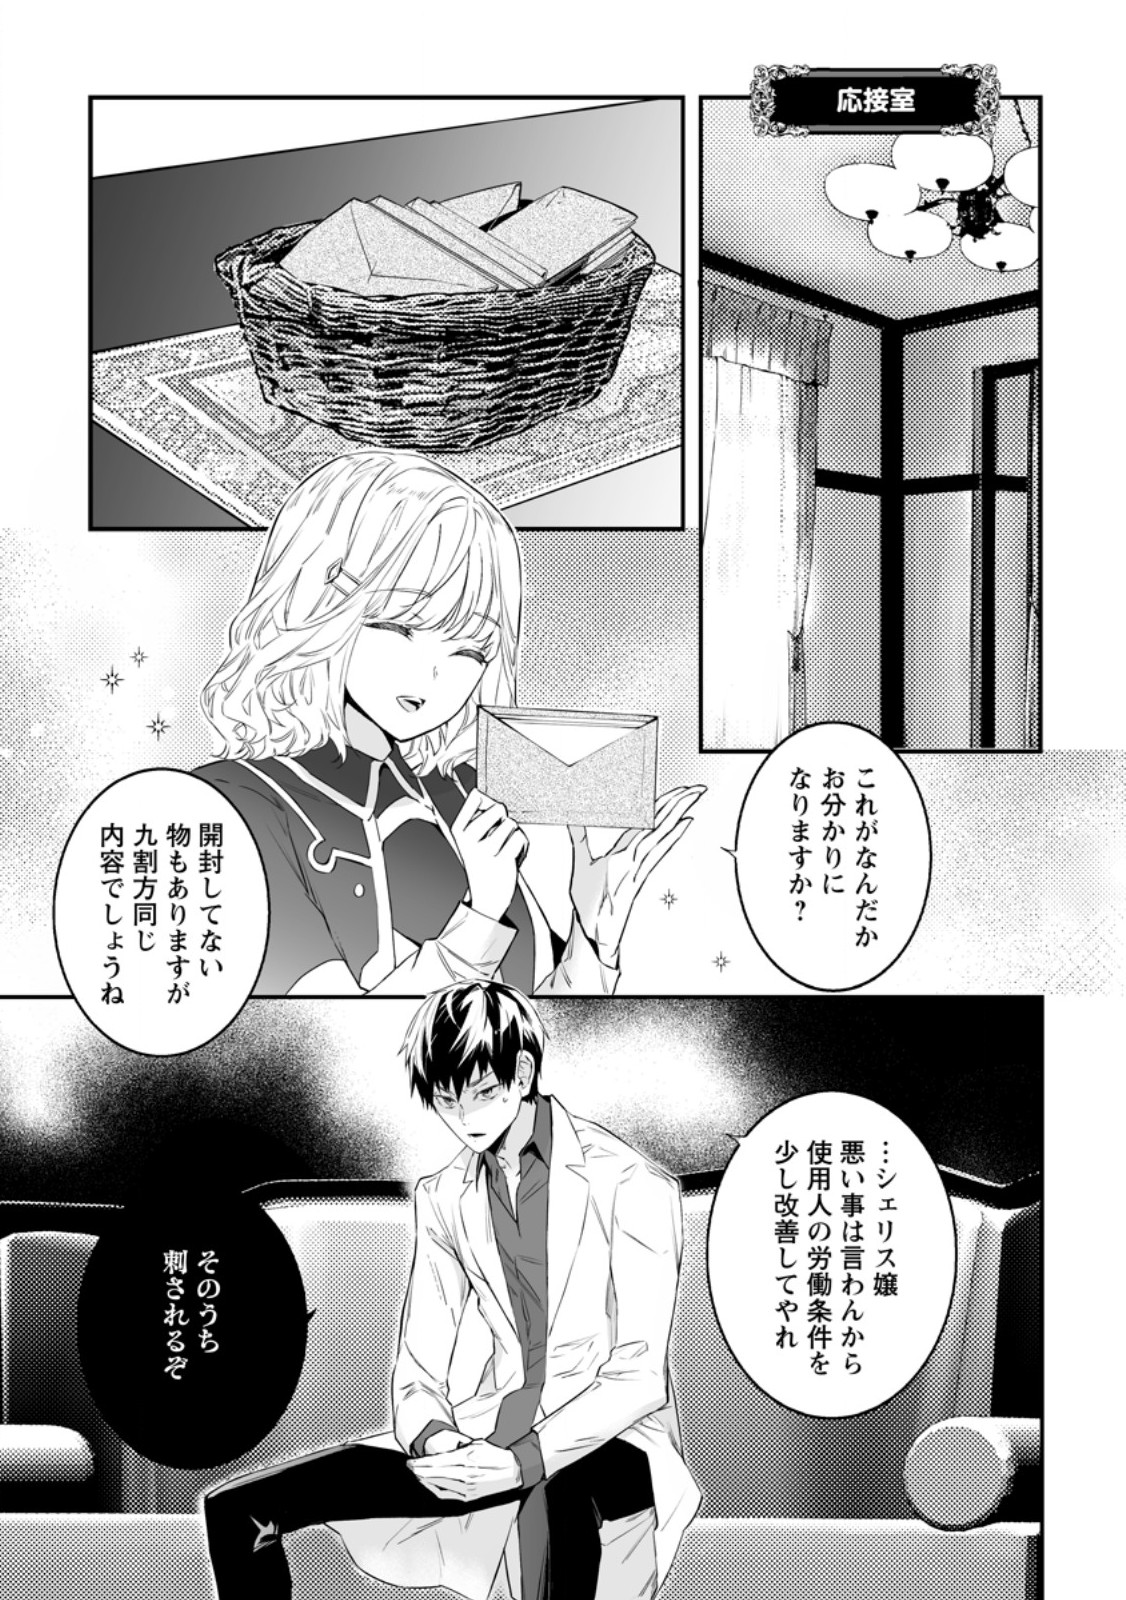 Hakui no Eiyuu - Chapter 34.1 - Page 1